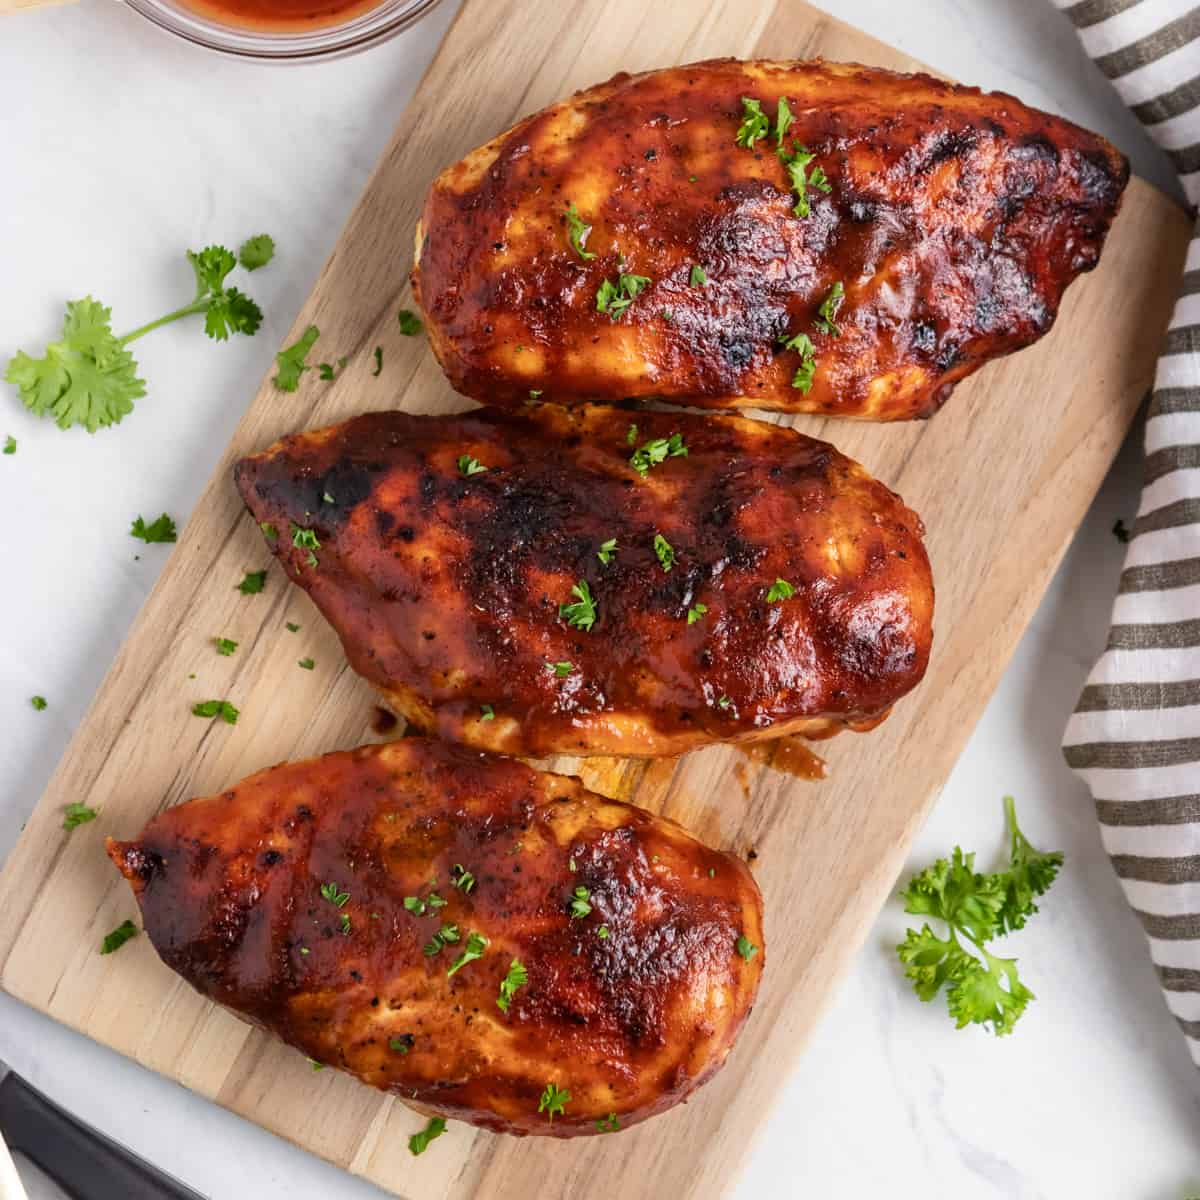 25 Best Air Fryer Chicken Recipes - How to Cook Chicken in an Air Fryer